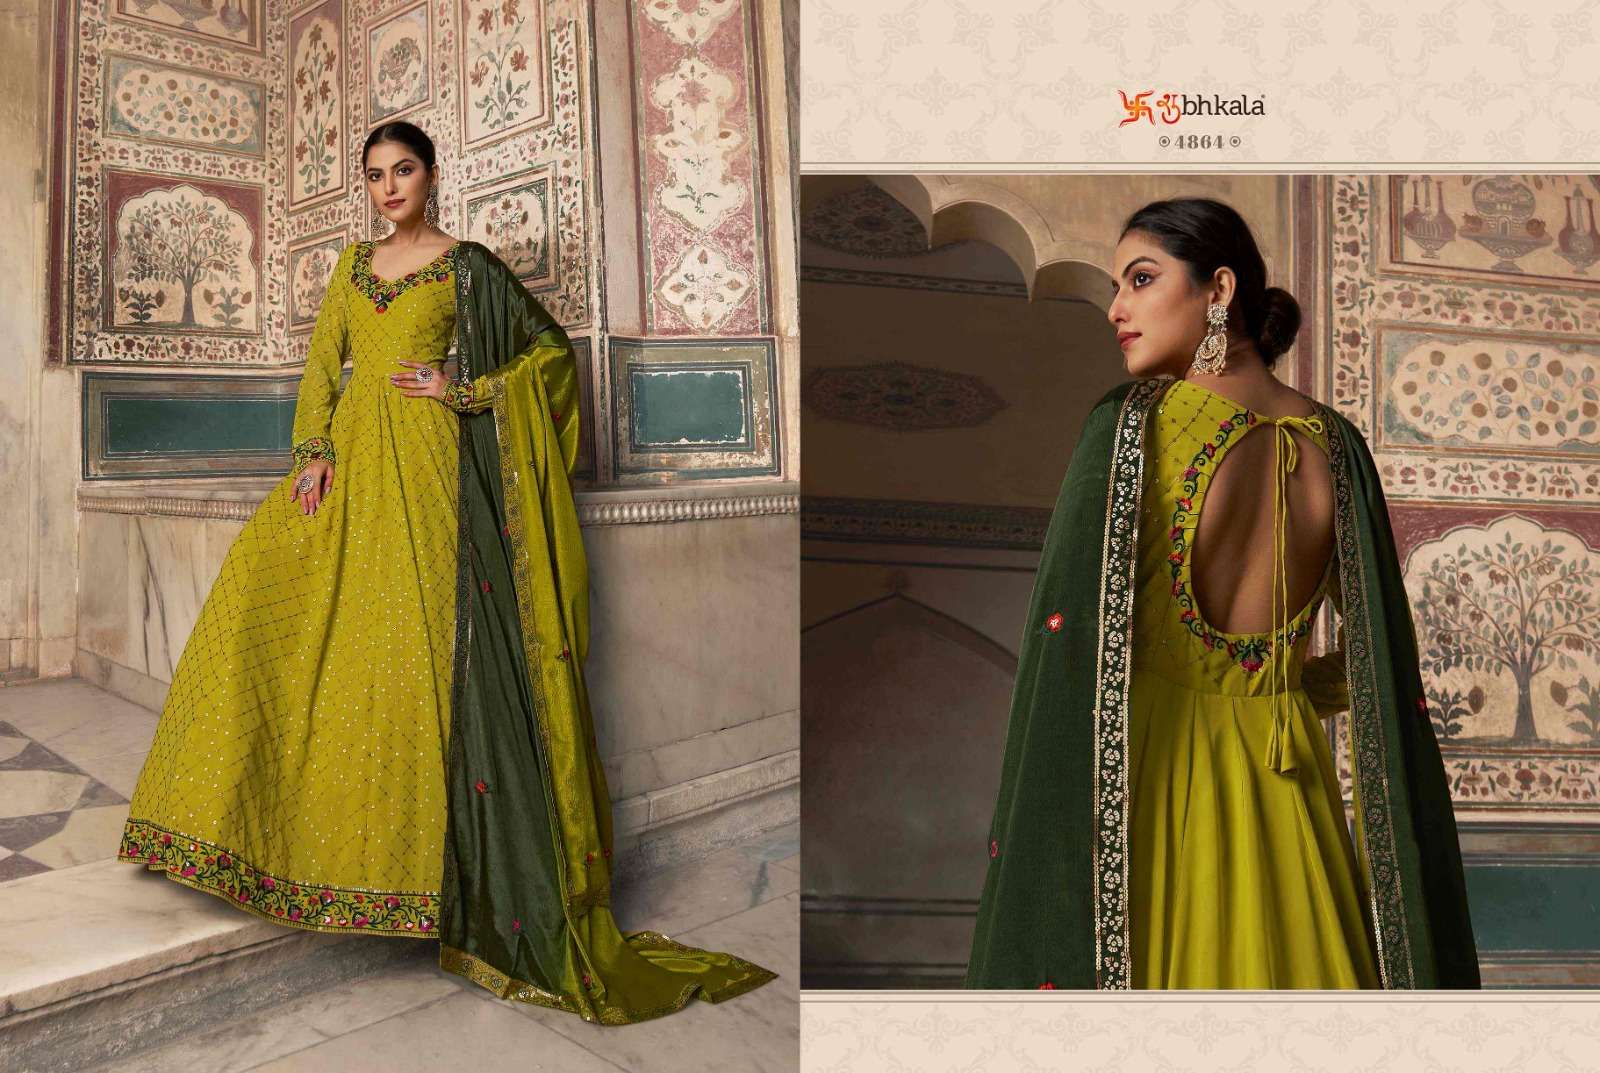 shubhakala flory vol 30 georgette elegant look gown with dupatta catalog